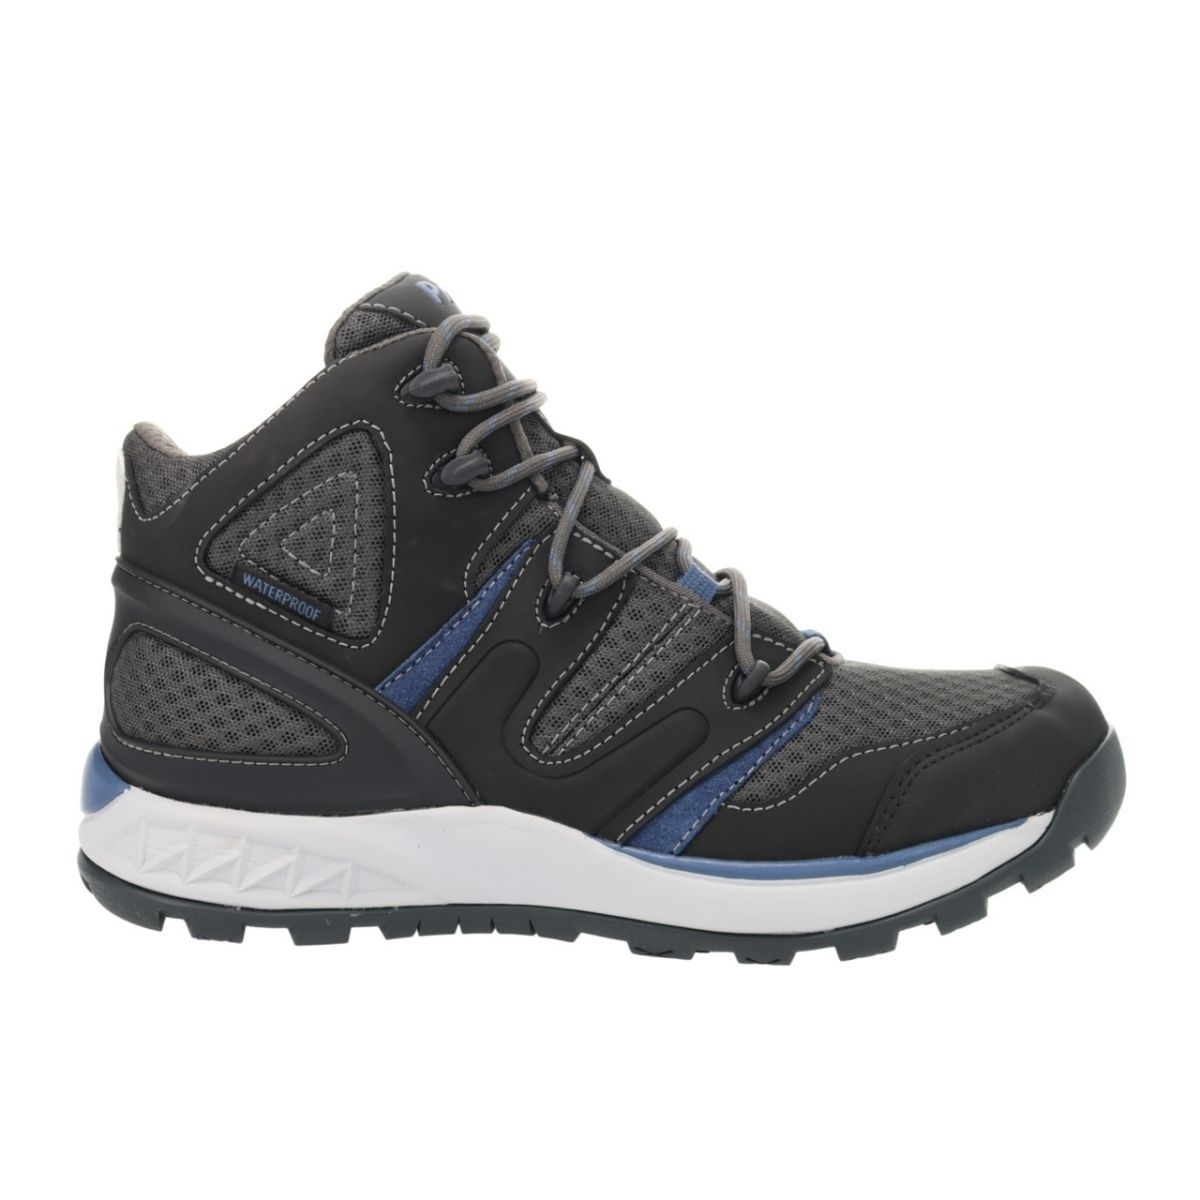 Propet Men's Veymont Waterproof Hiking Boot Grey/Blue - MOA022SGRB GREY/BLUE - GREY/BLUE, 9.5 XX-Wide